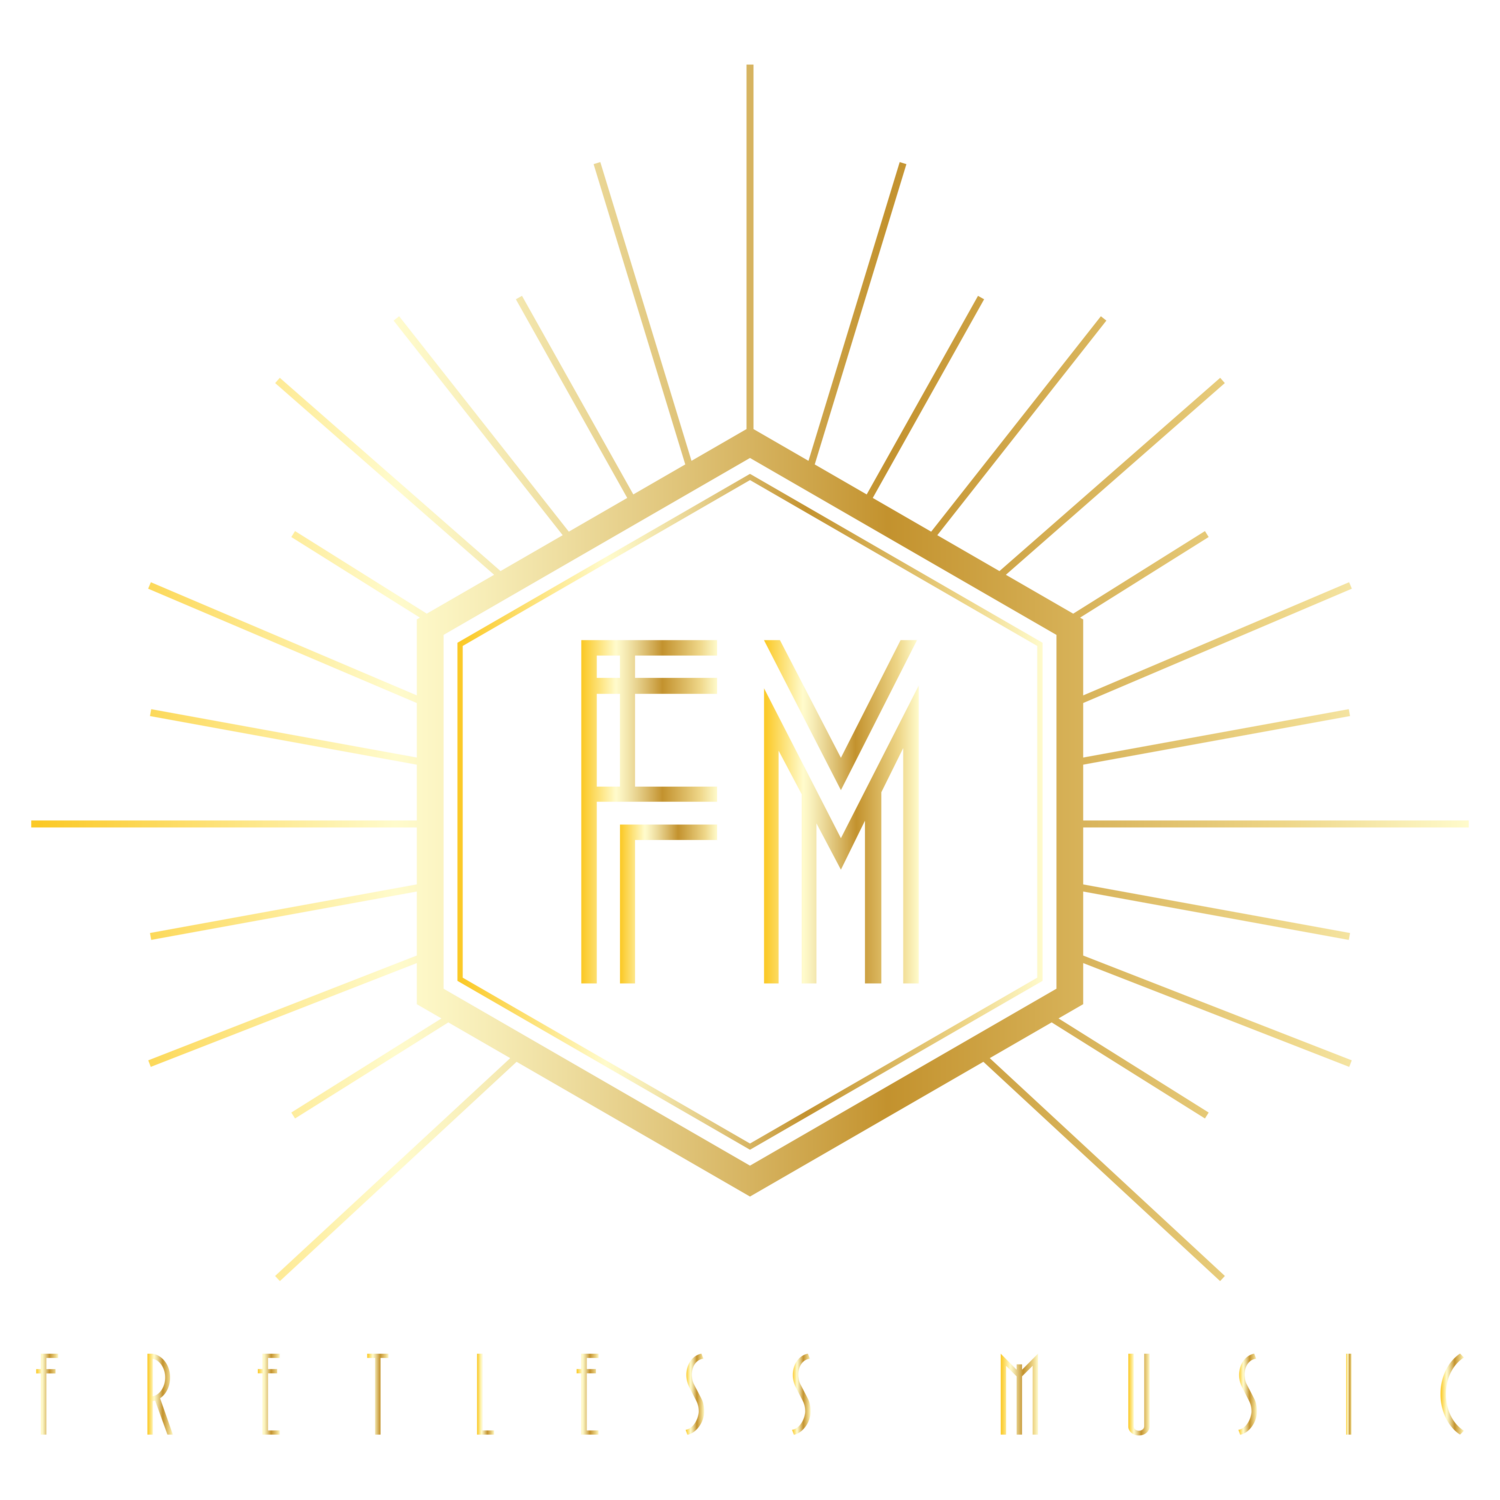 Fretless Music, LLC